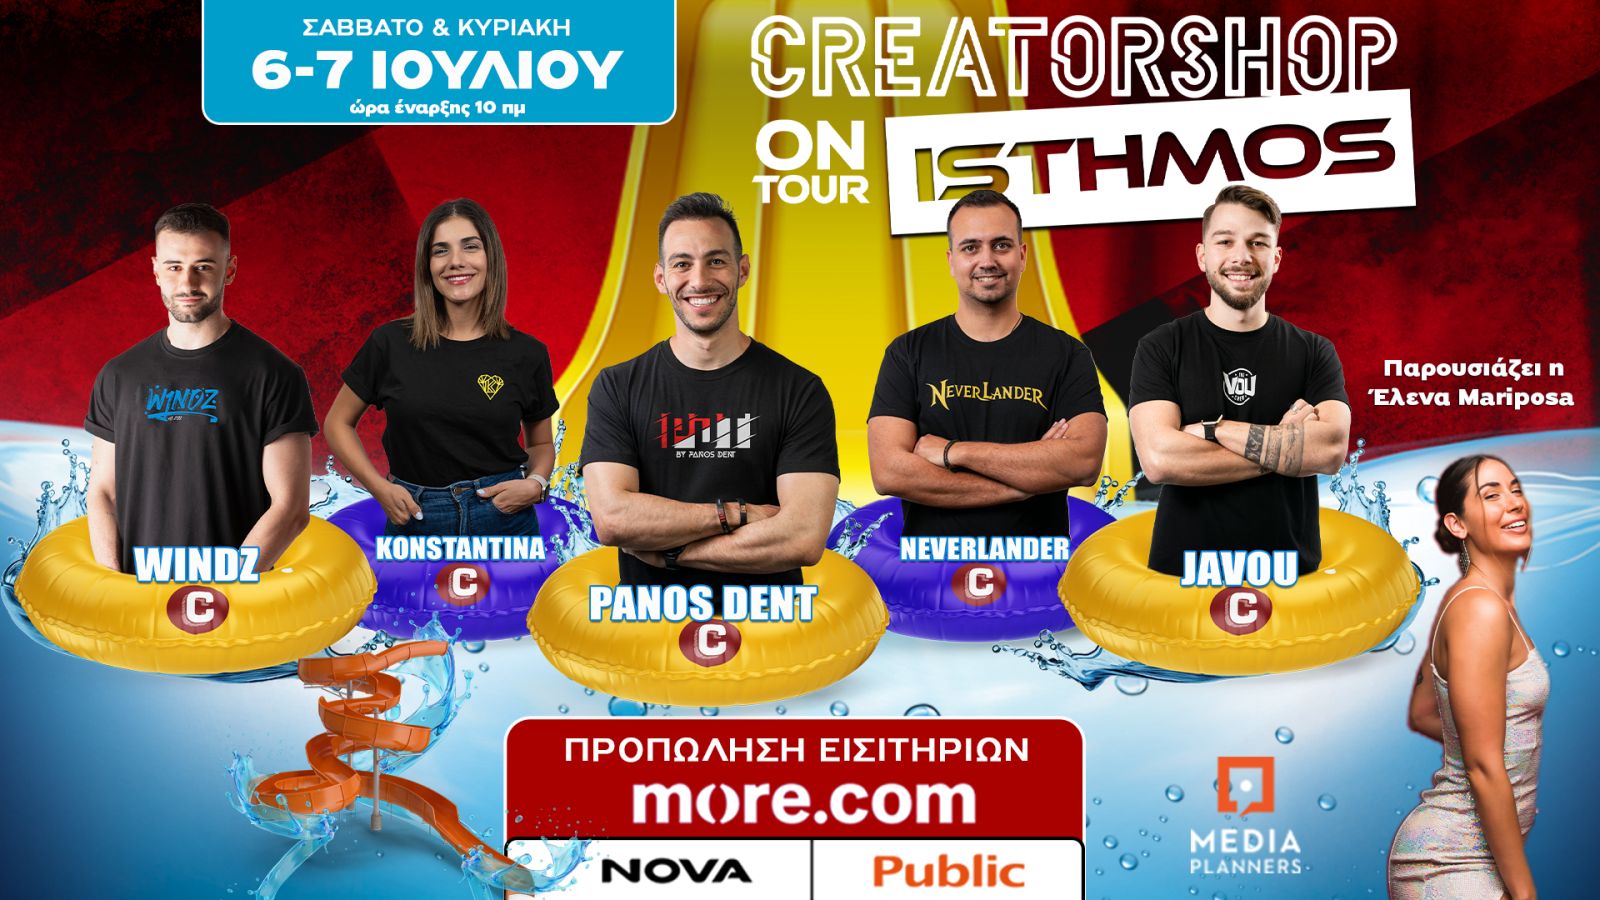 Creatorshop Isthmos Event